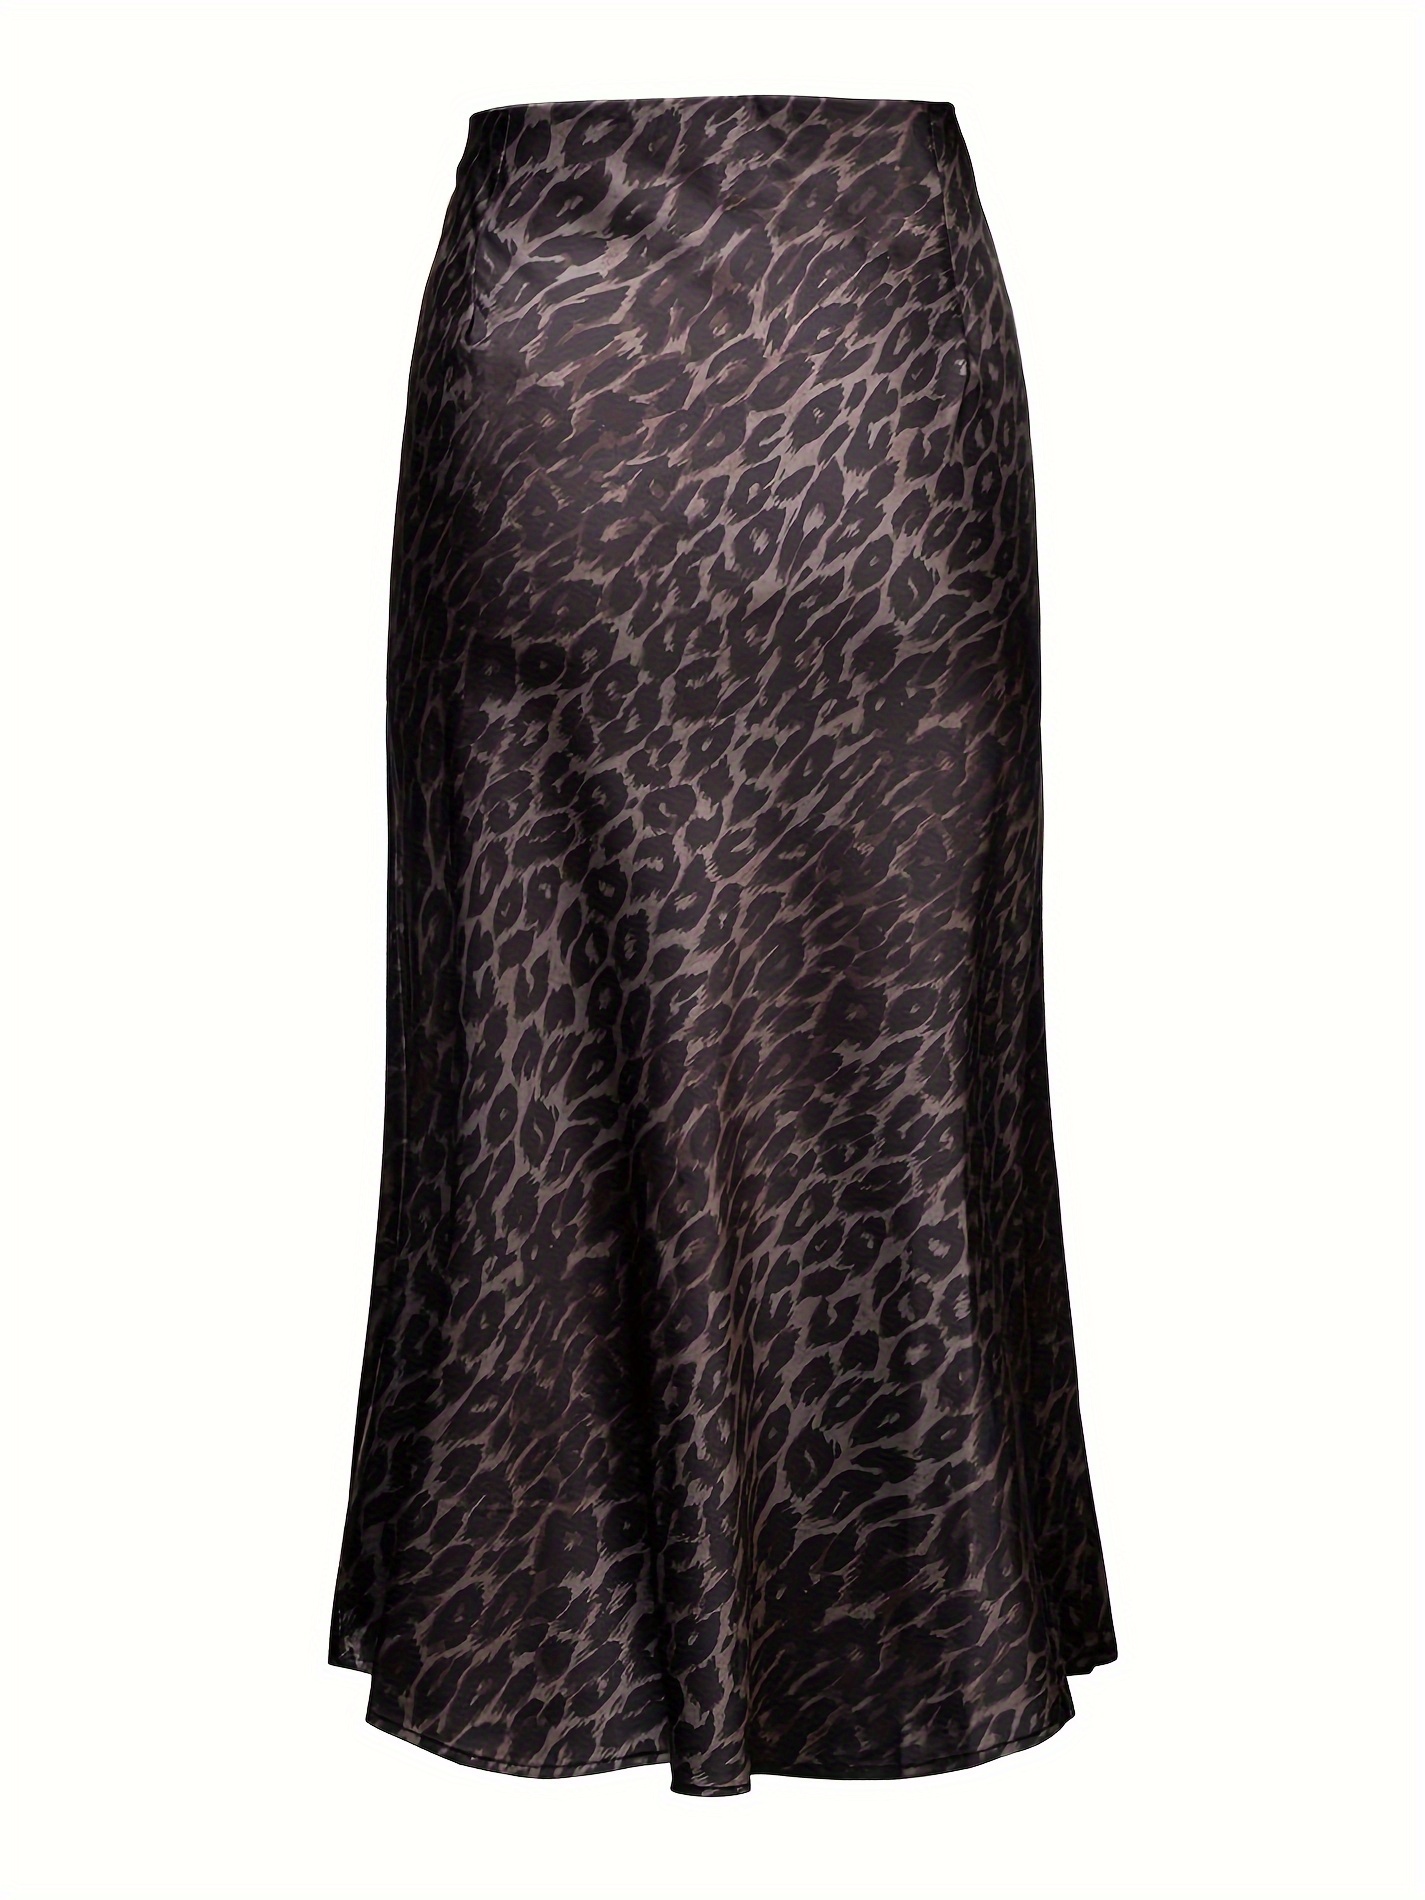 Leopard Print High Waist Skirt, Sexy Bodycon Mini Skirt For Spring ...